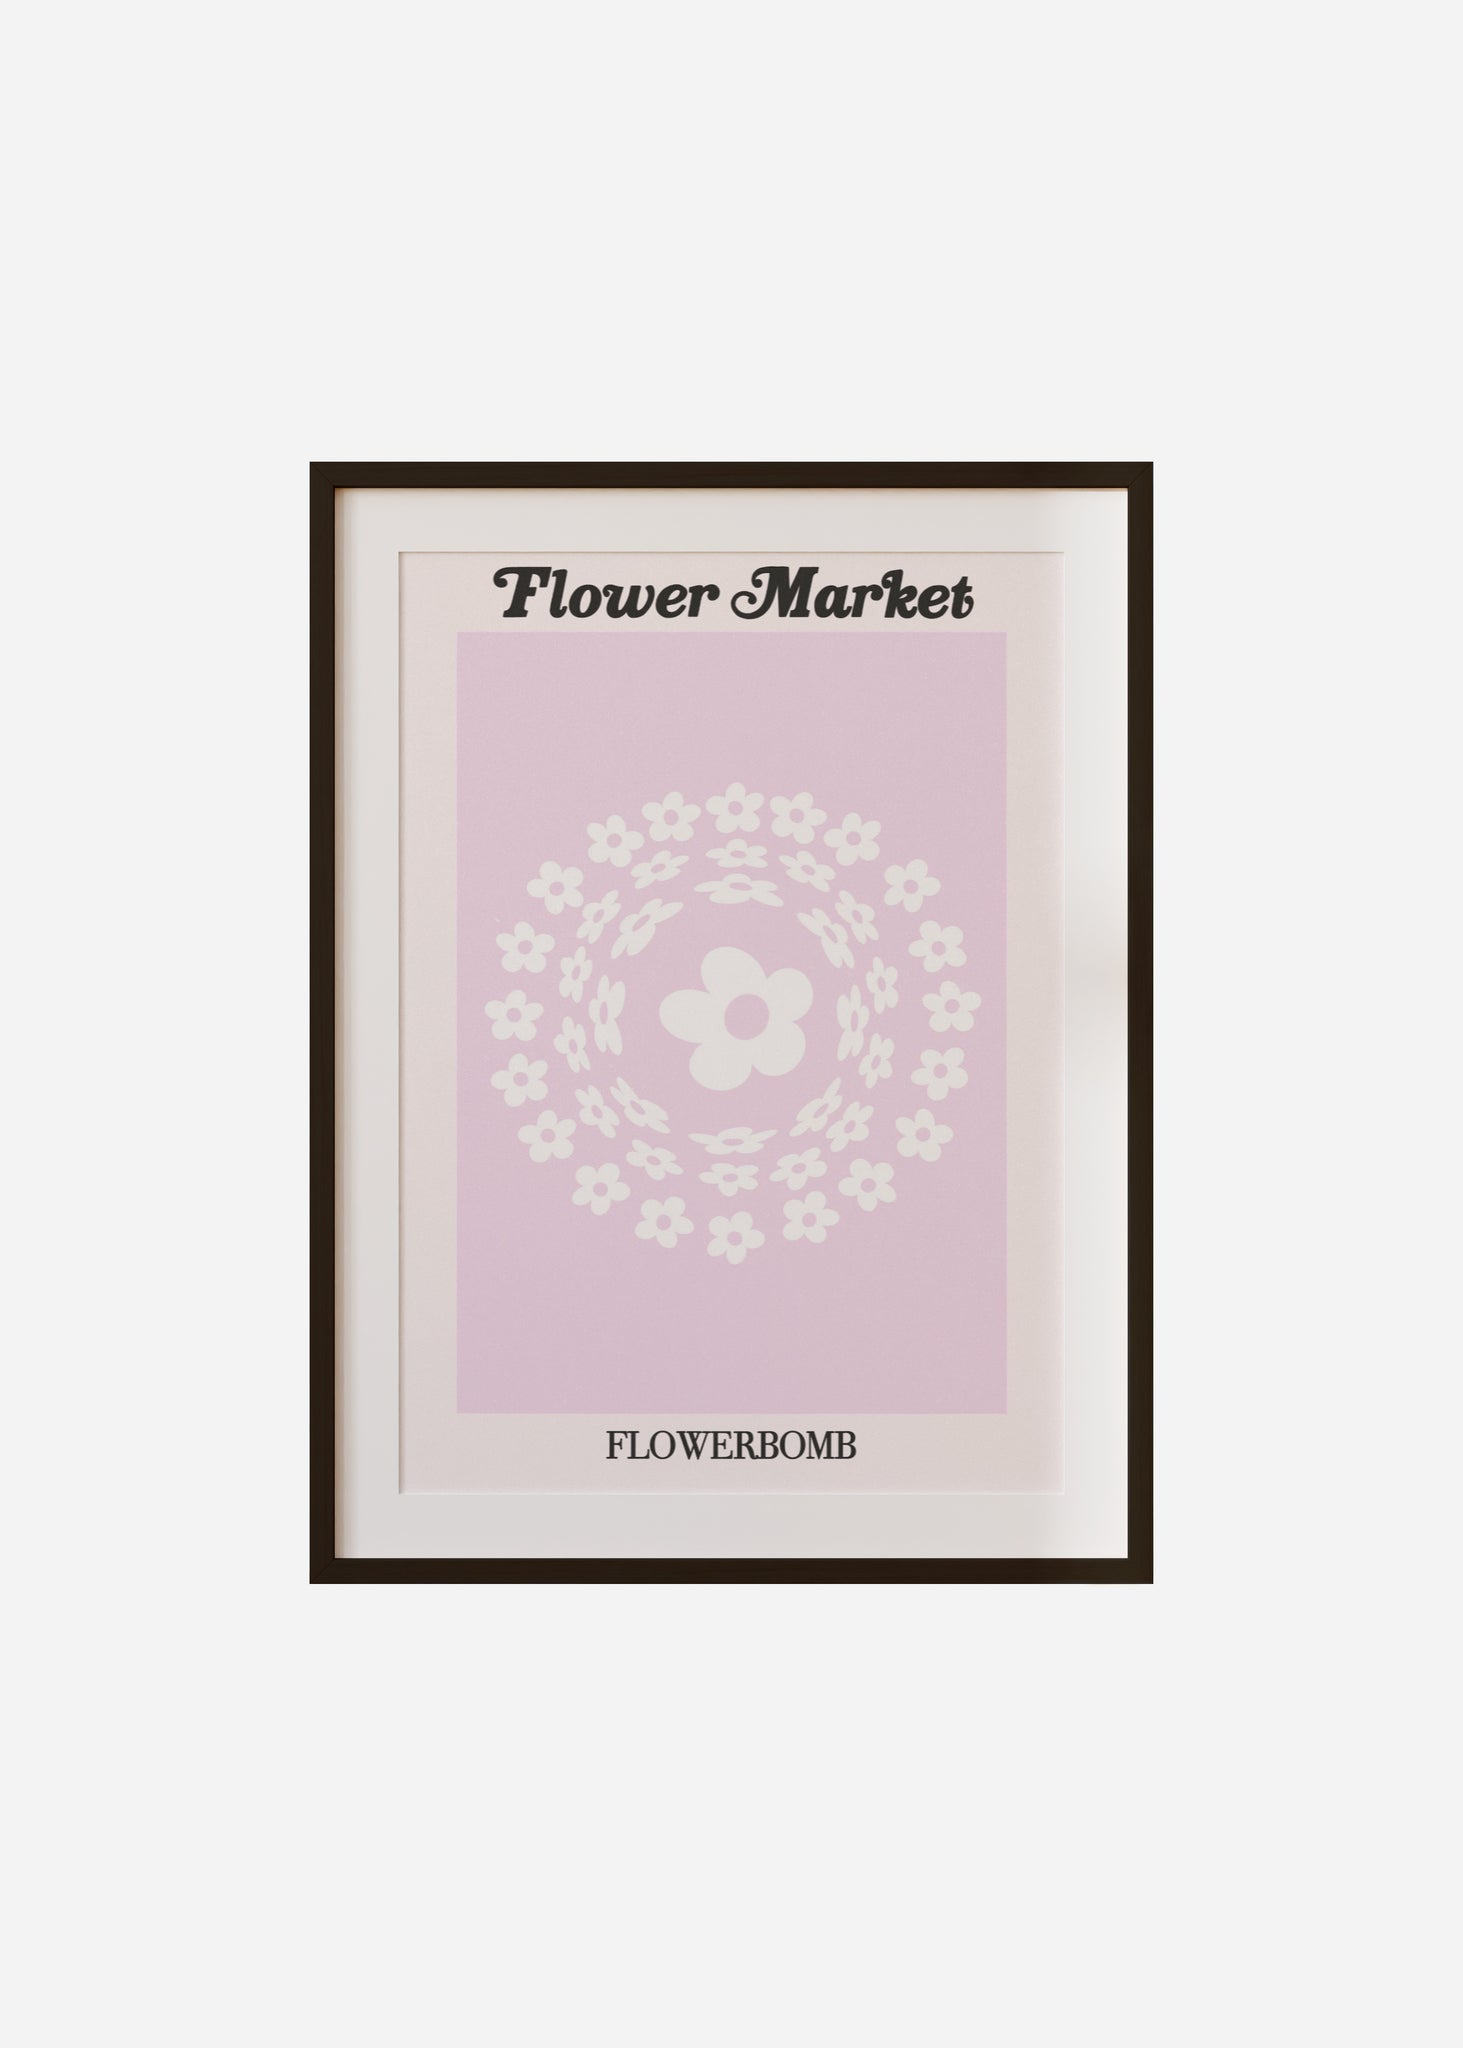 flower market / flowerbomb Framed & Mounted Print